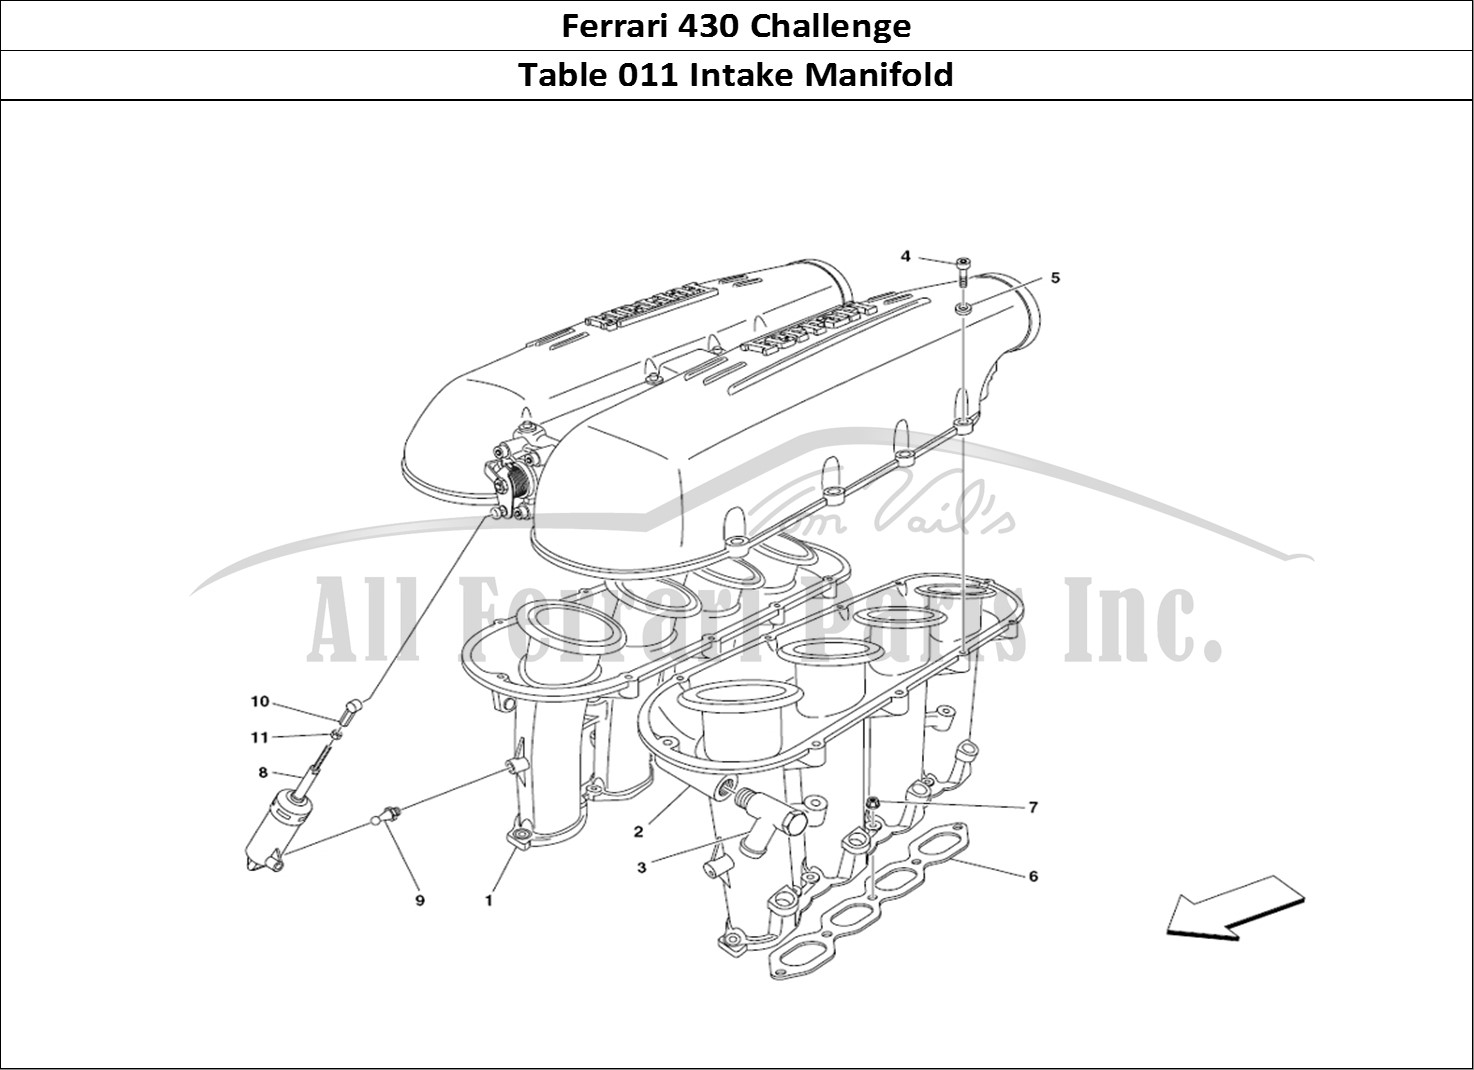 Ferrari Parts Ferrari 430 Challenge (2006) Page 011 Air Intake Manifold